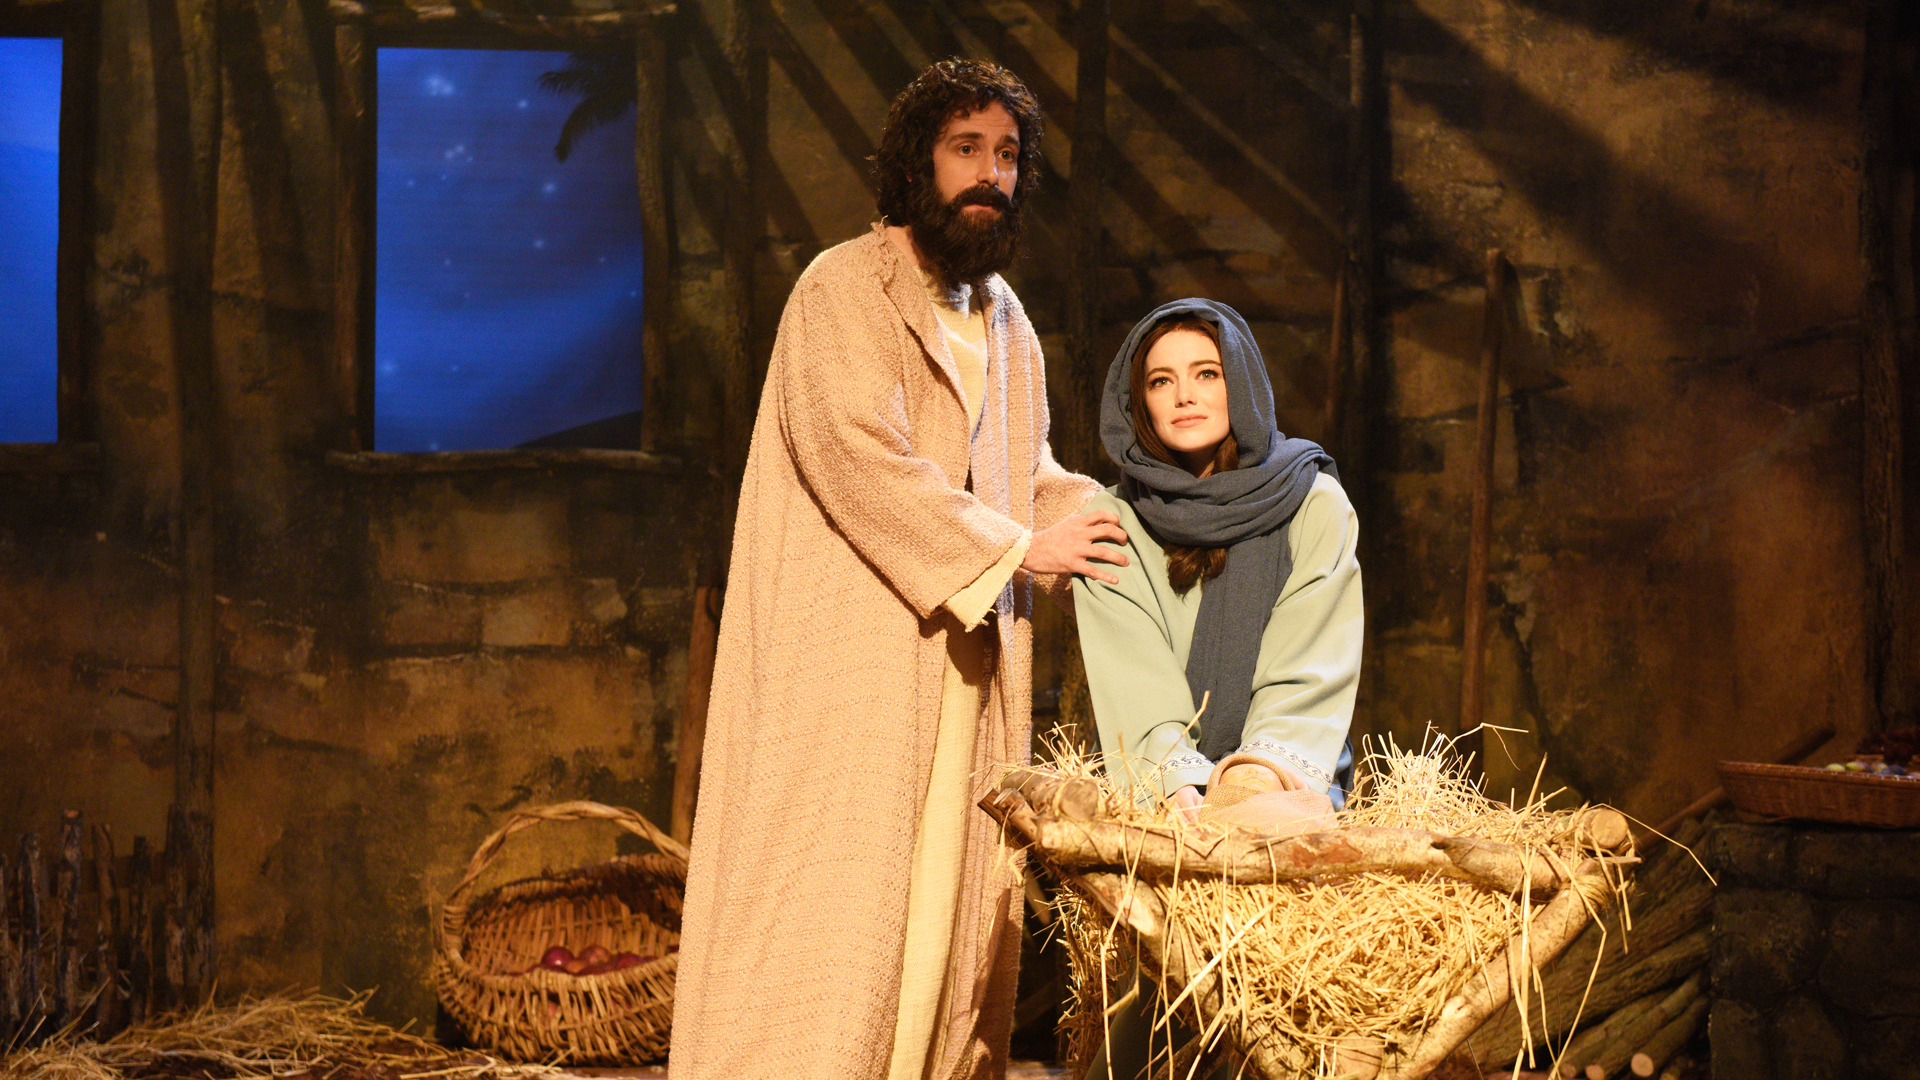 Watch The Nativity From Saturday Night Live - NBC.com1920 x 1080